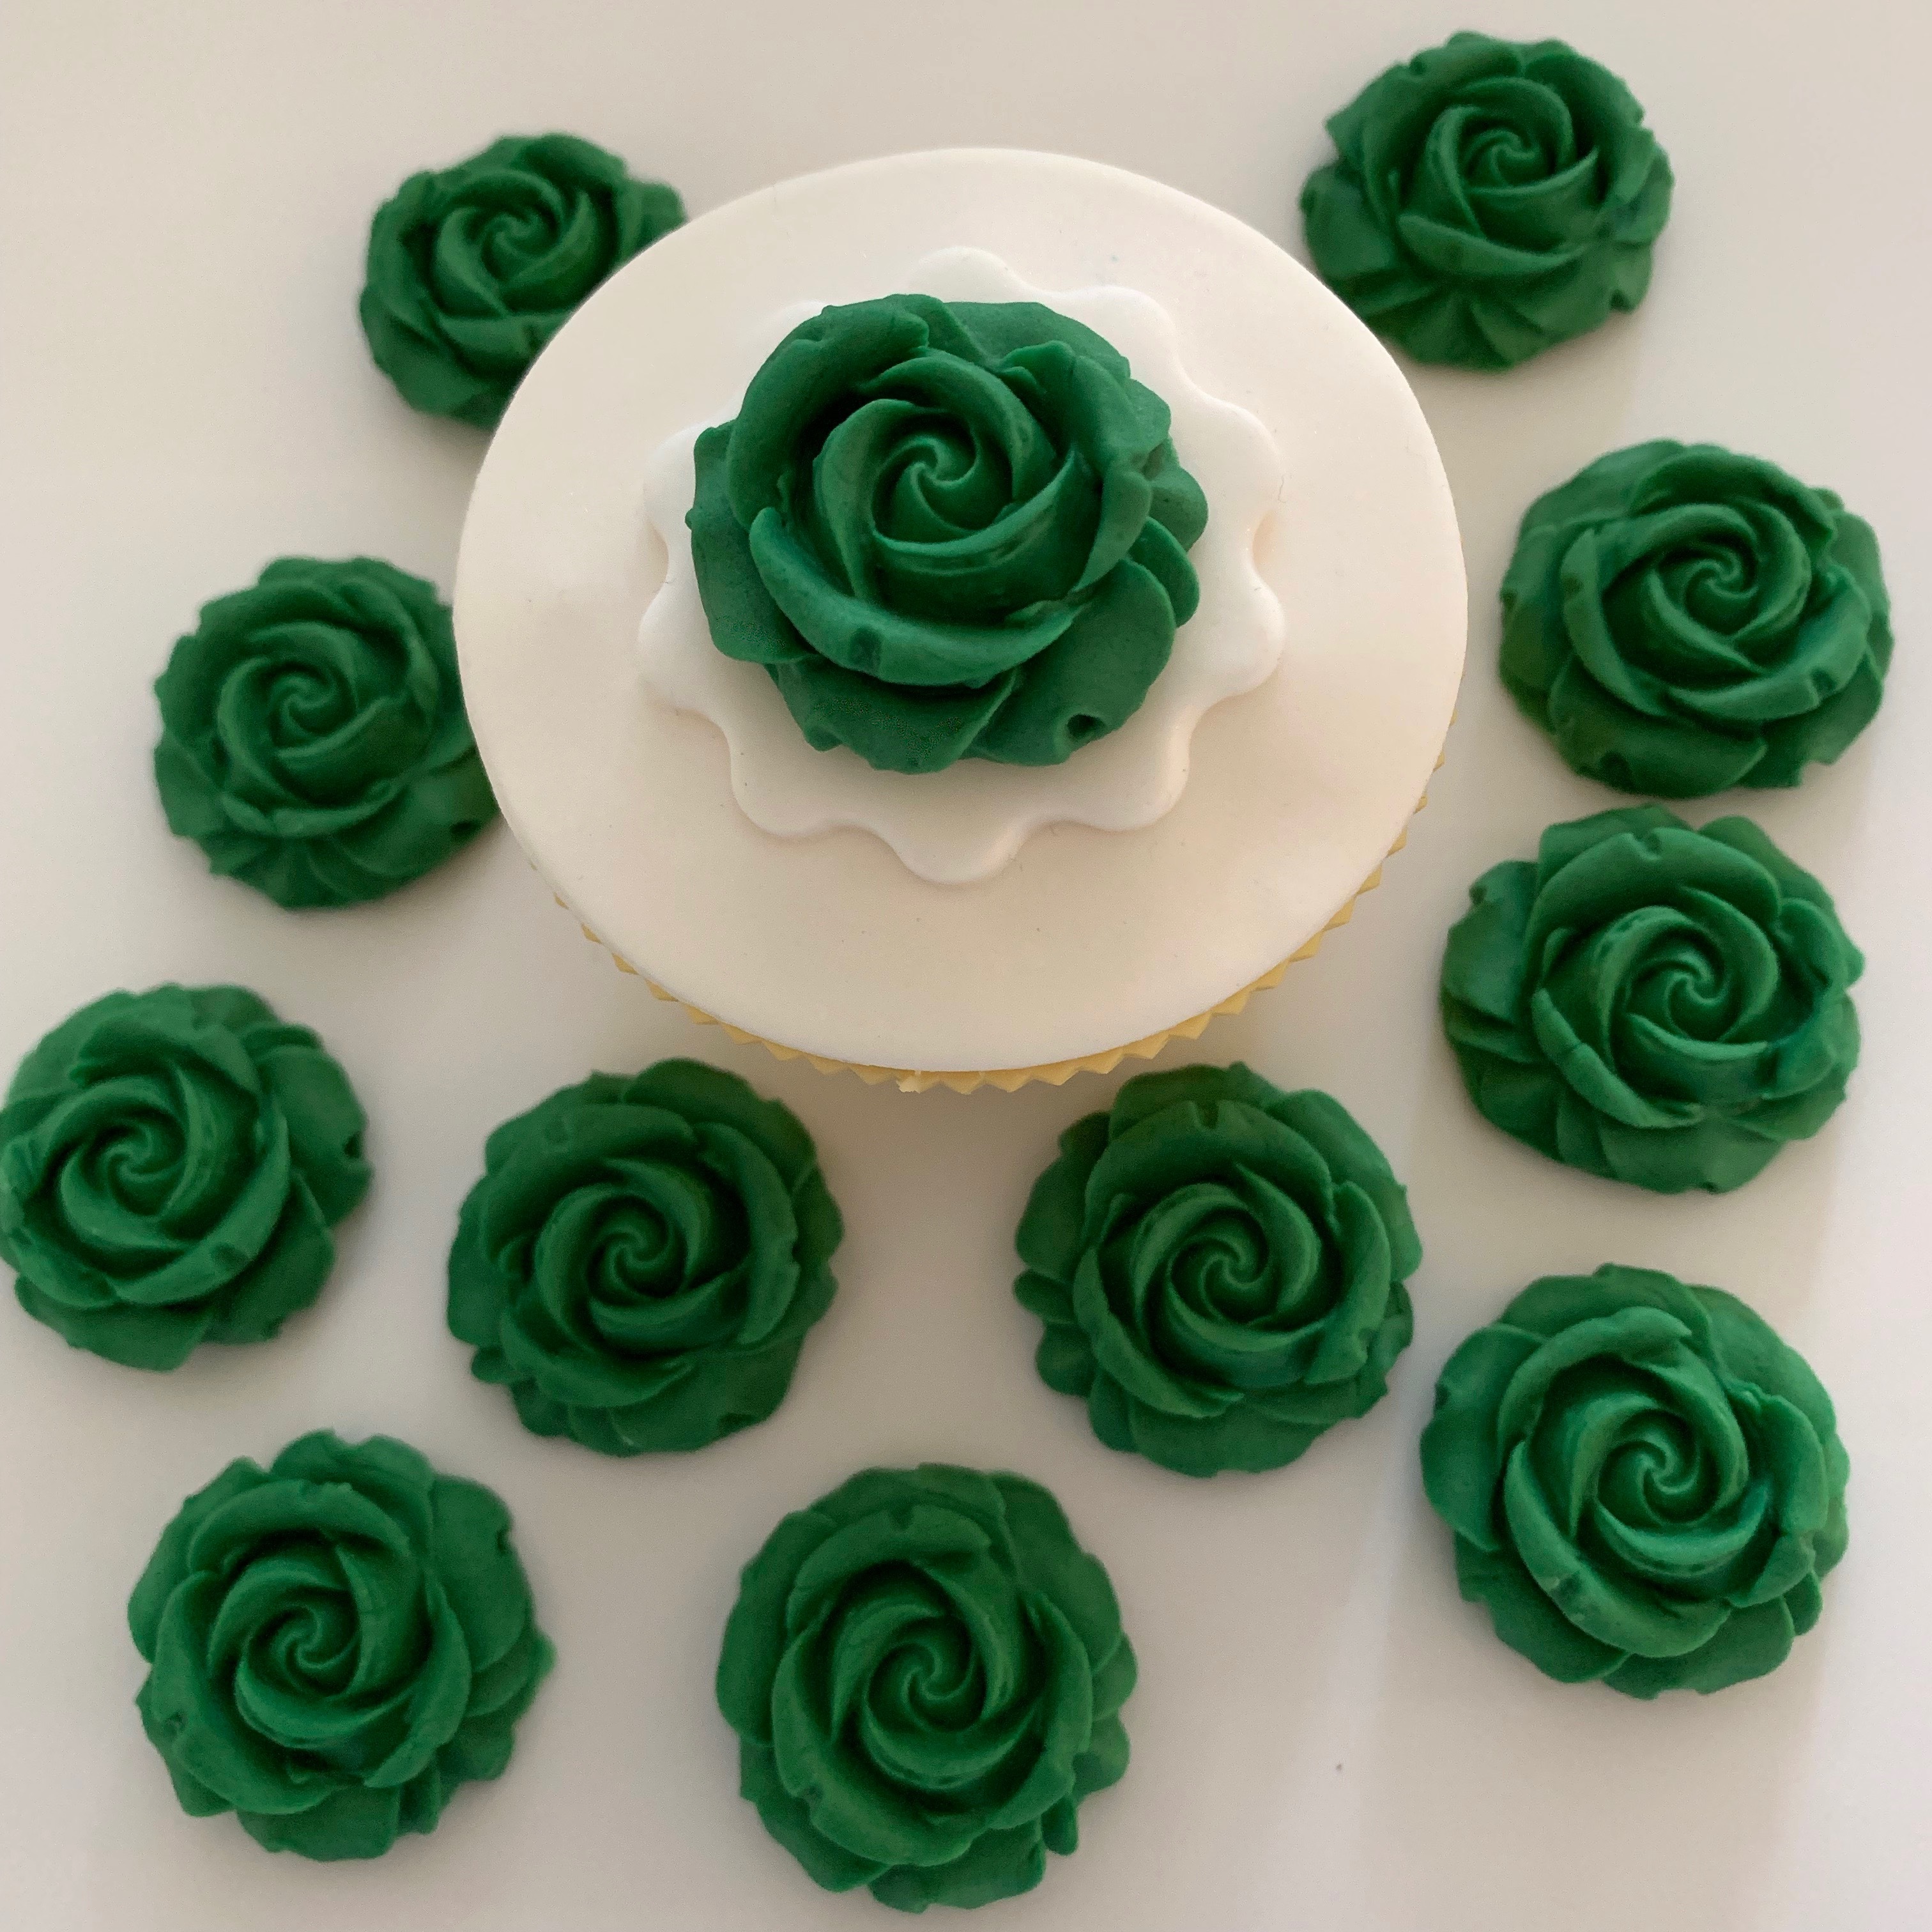 12 Emerald Green Sugar Roses St Patrick wedding cake decorations 2 SIZES 25/30mm 